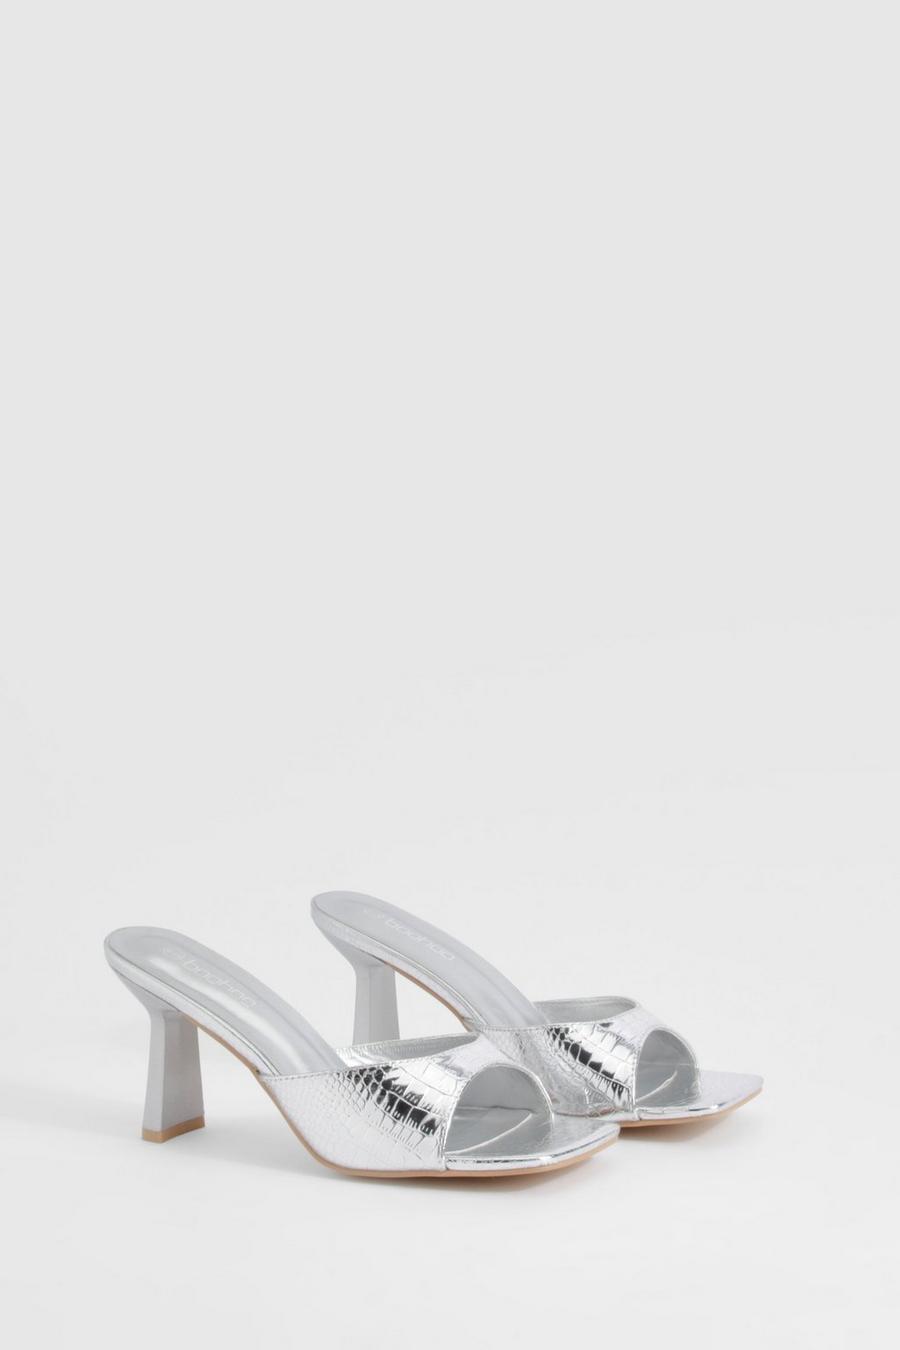 Silver Sandals SOLO FEMME 72908-02-K50 000-07-00 Black